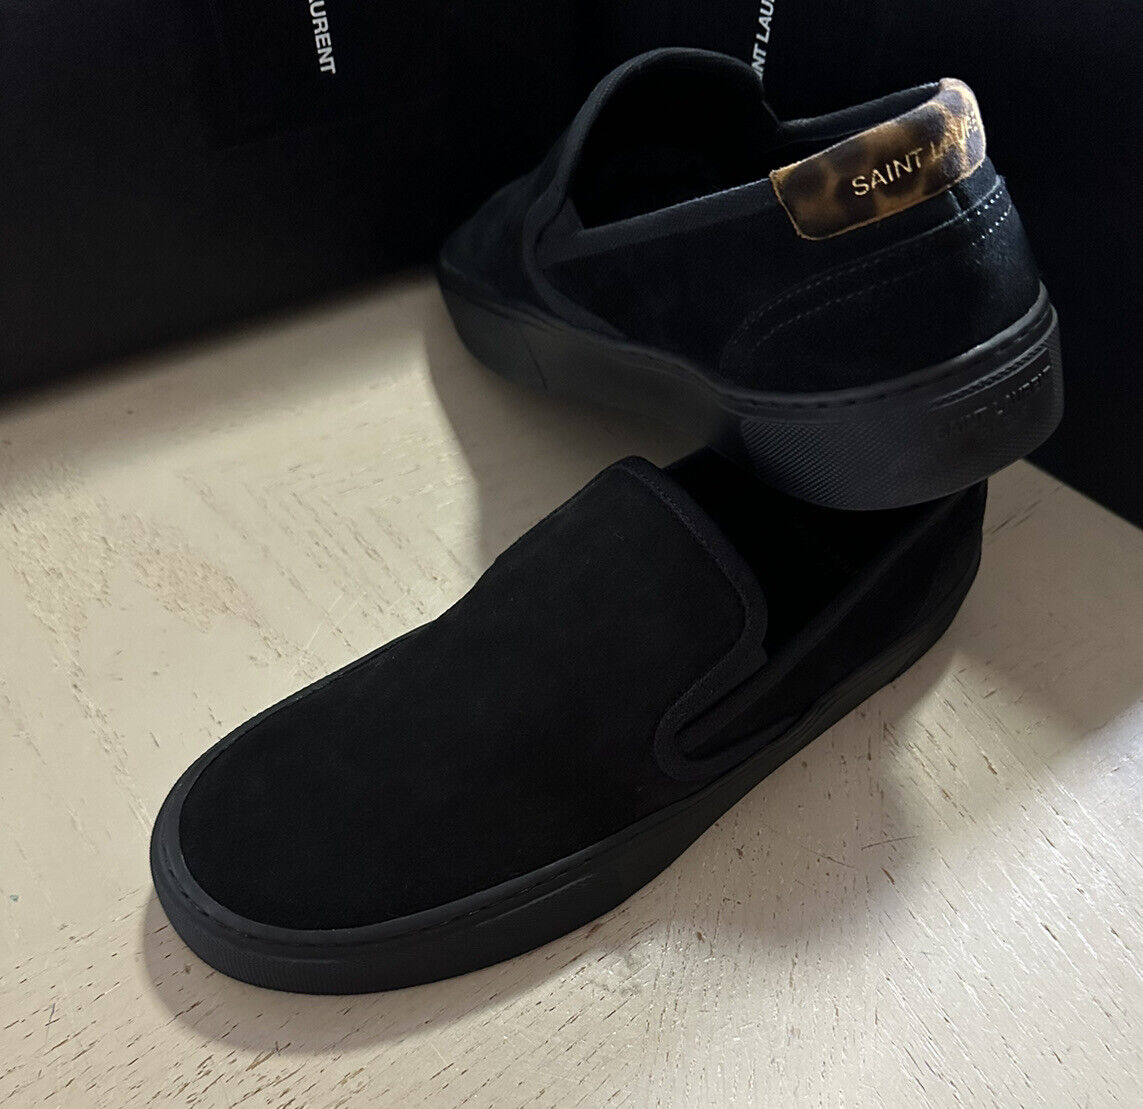 NIB Saint Laurent Men’s Suede Sneakers Shoes Black 8 US/41 Eu Italy